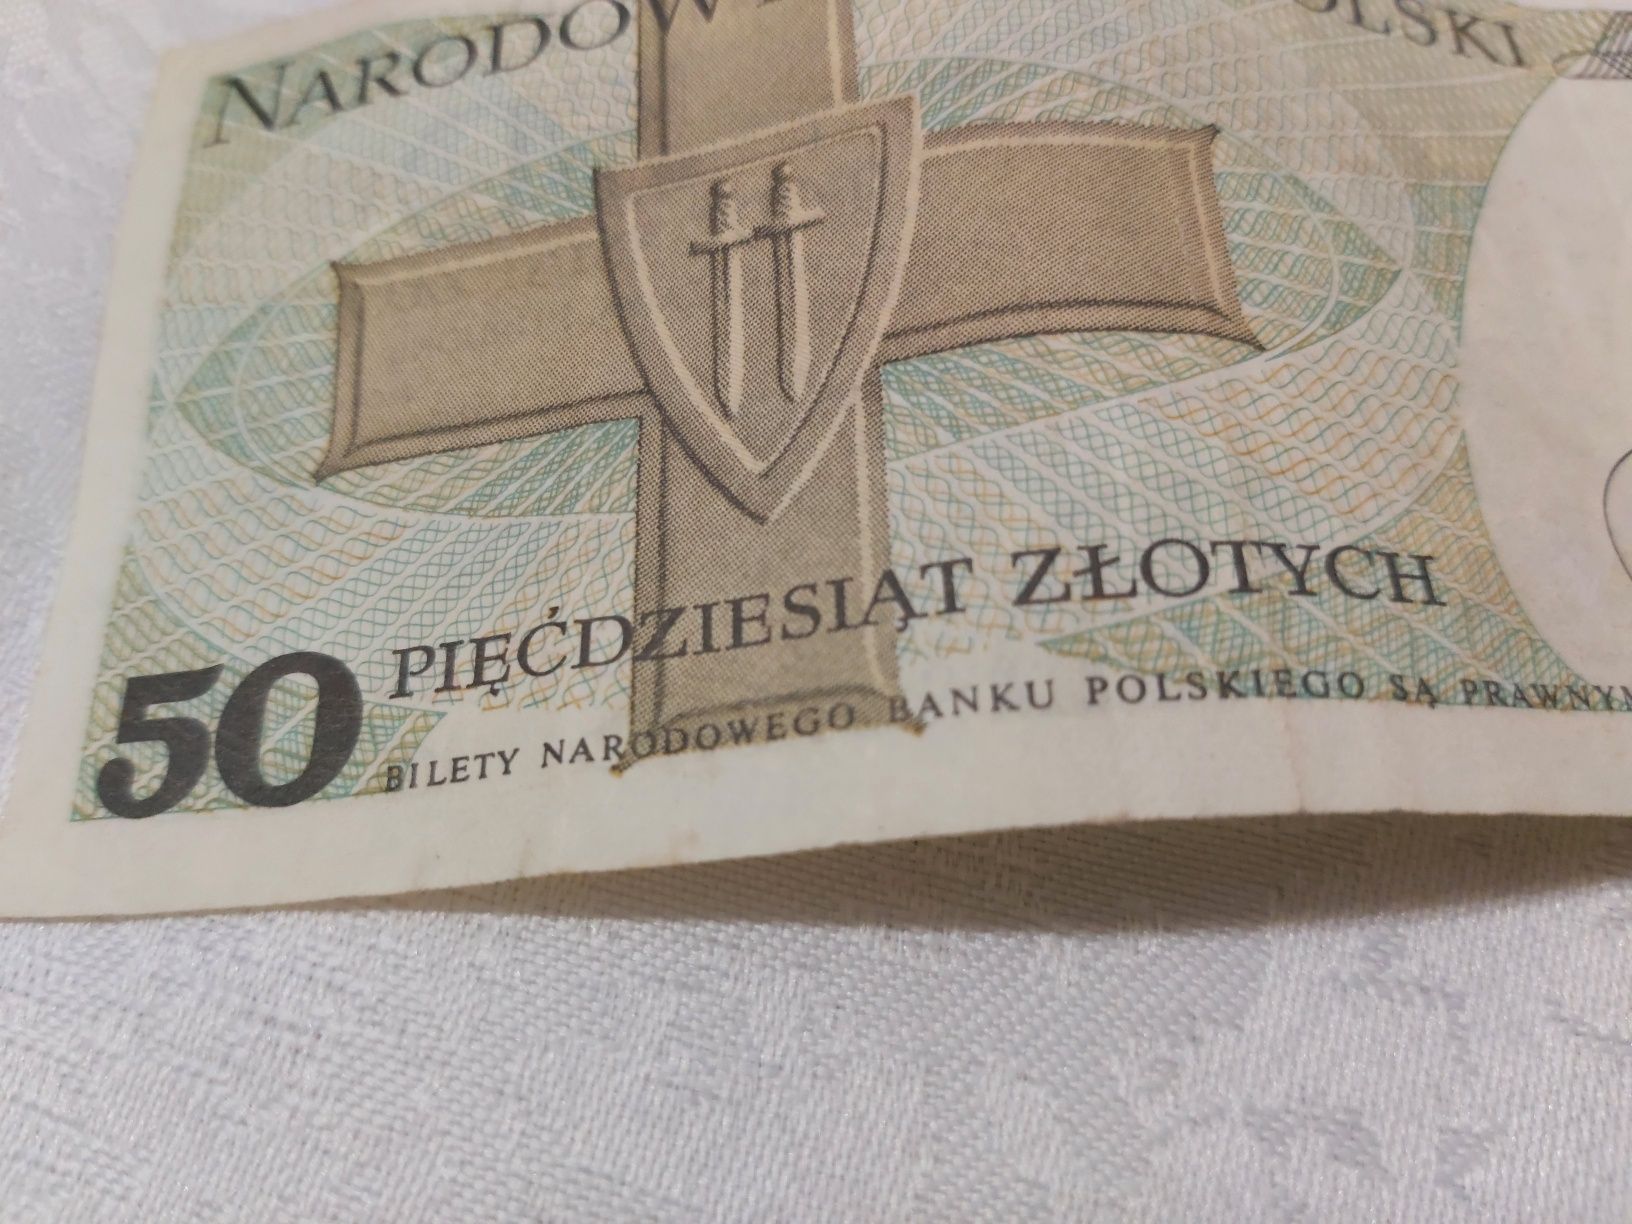 Banknot 50 zł z 1988